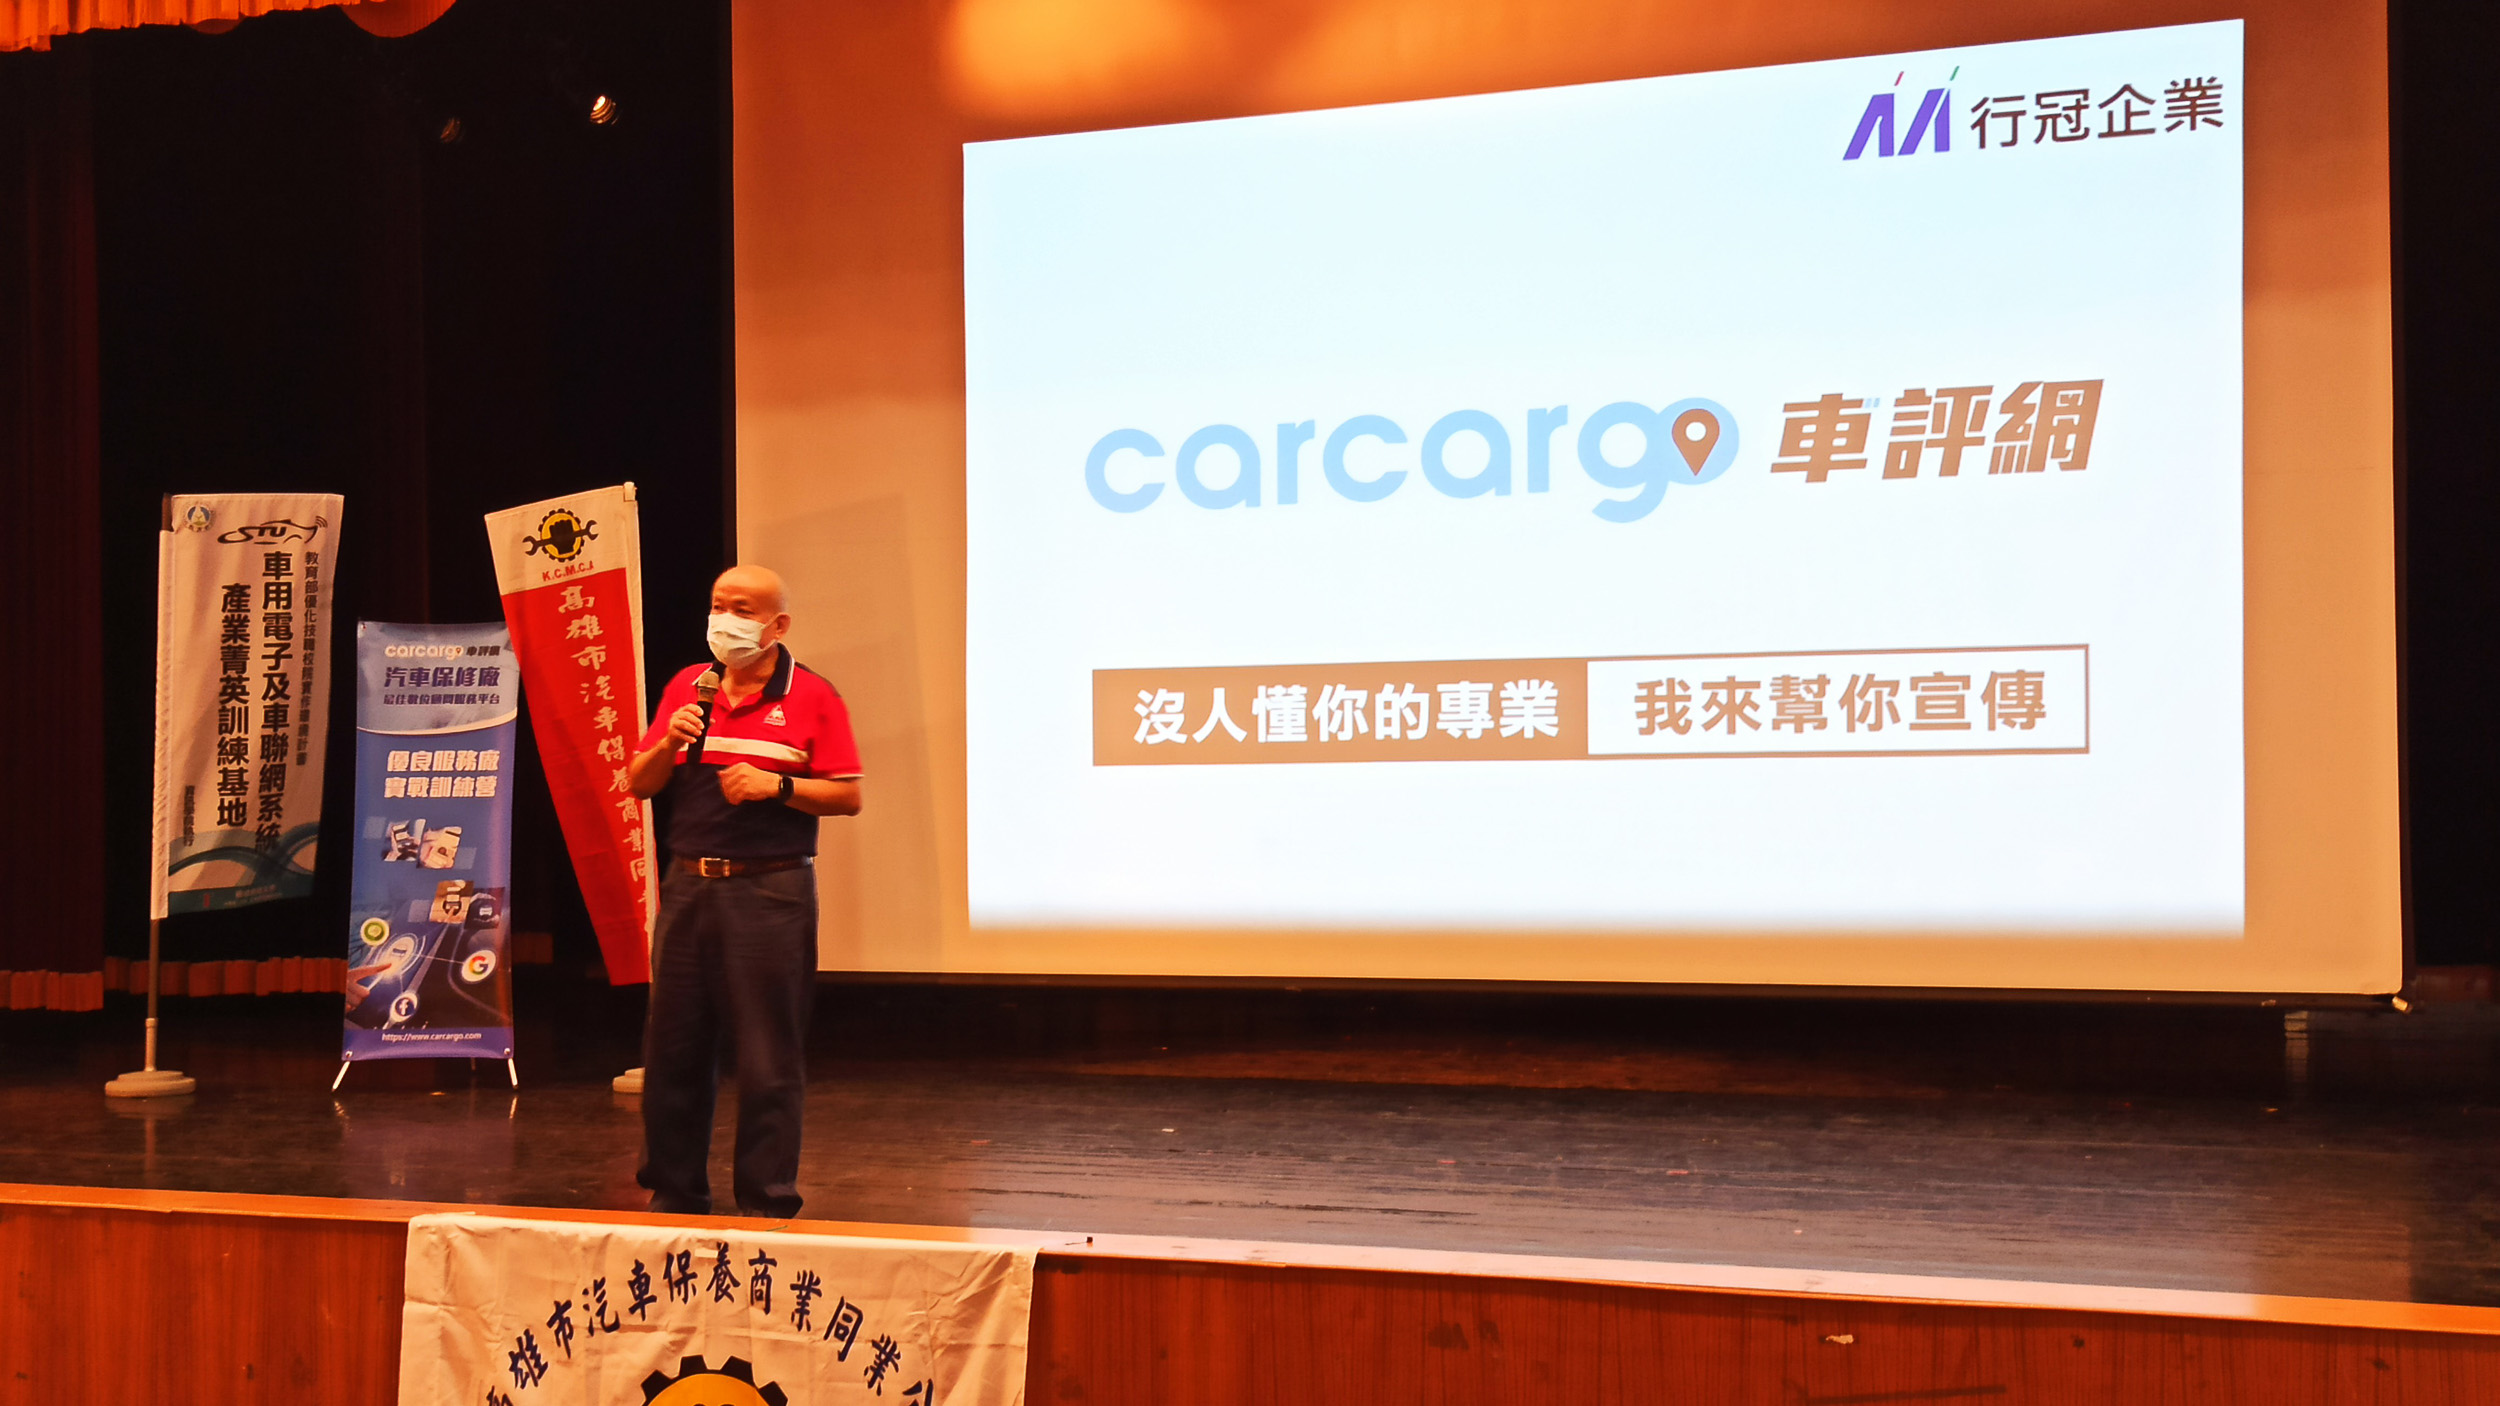 carcargo 車評網互利共生經營保修市場